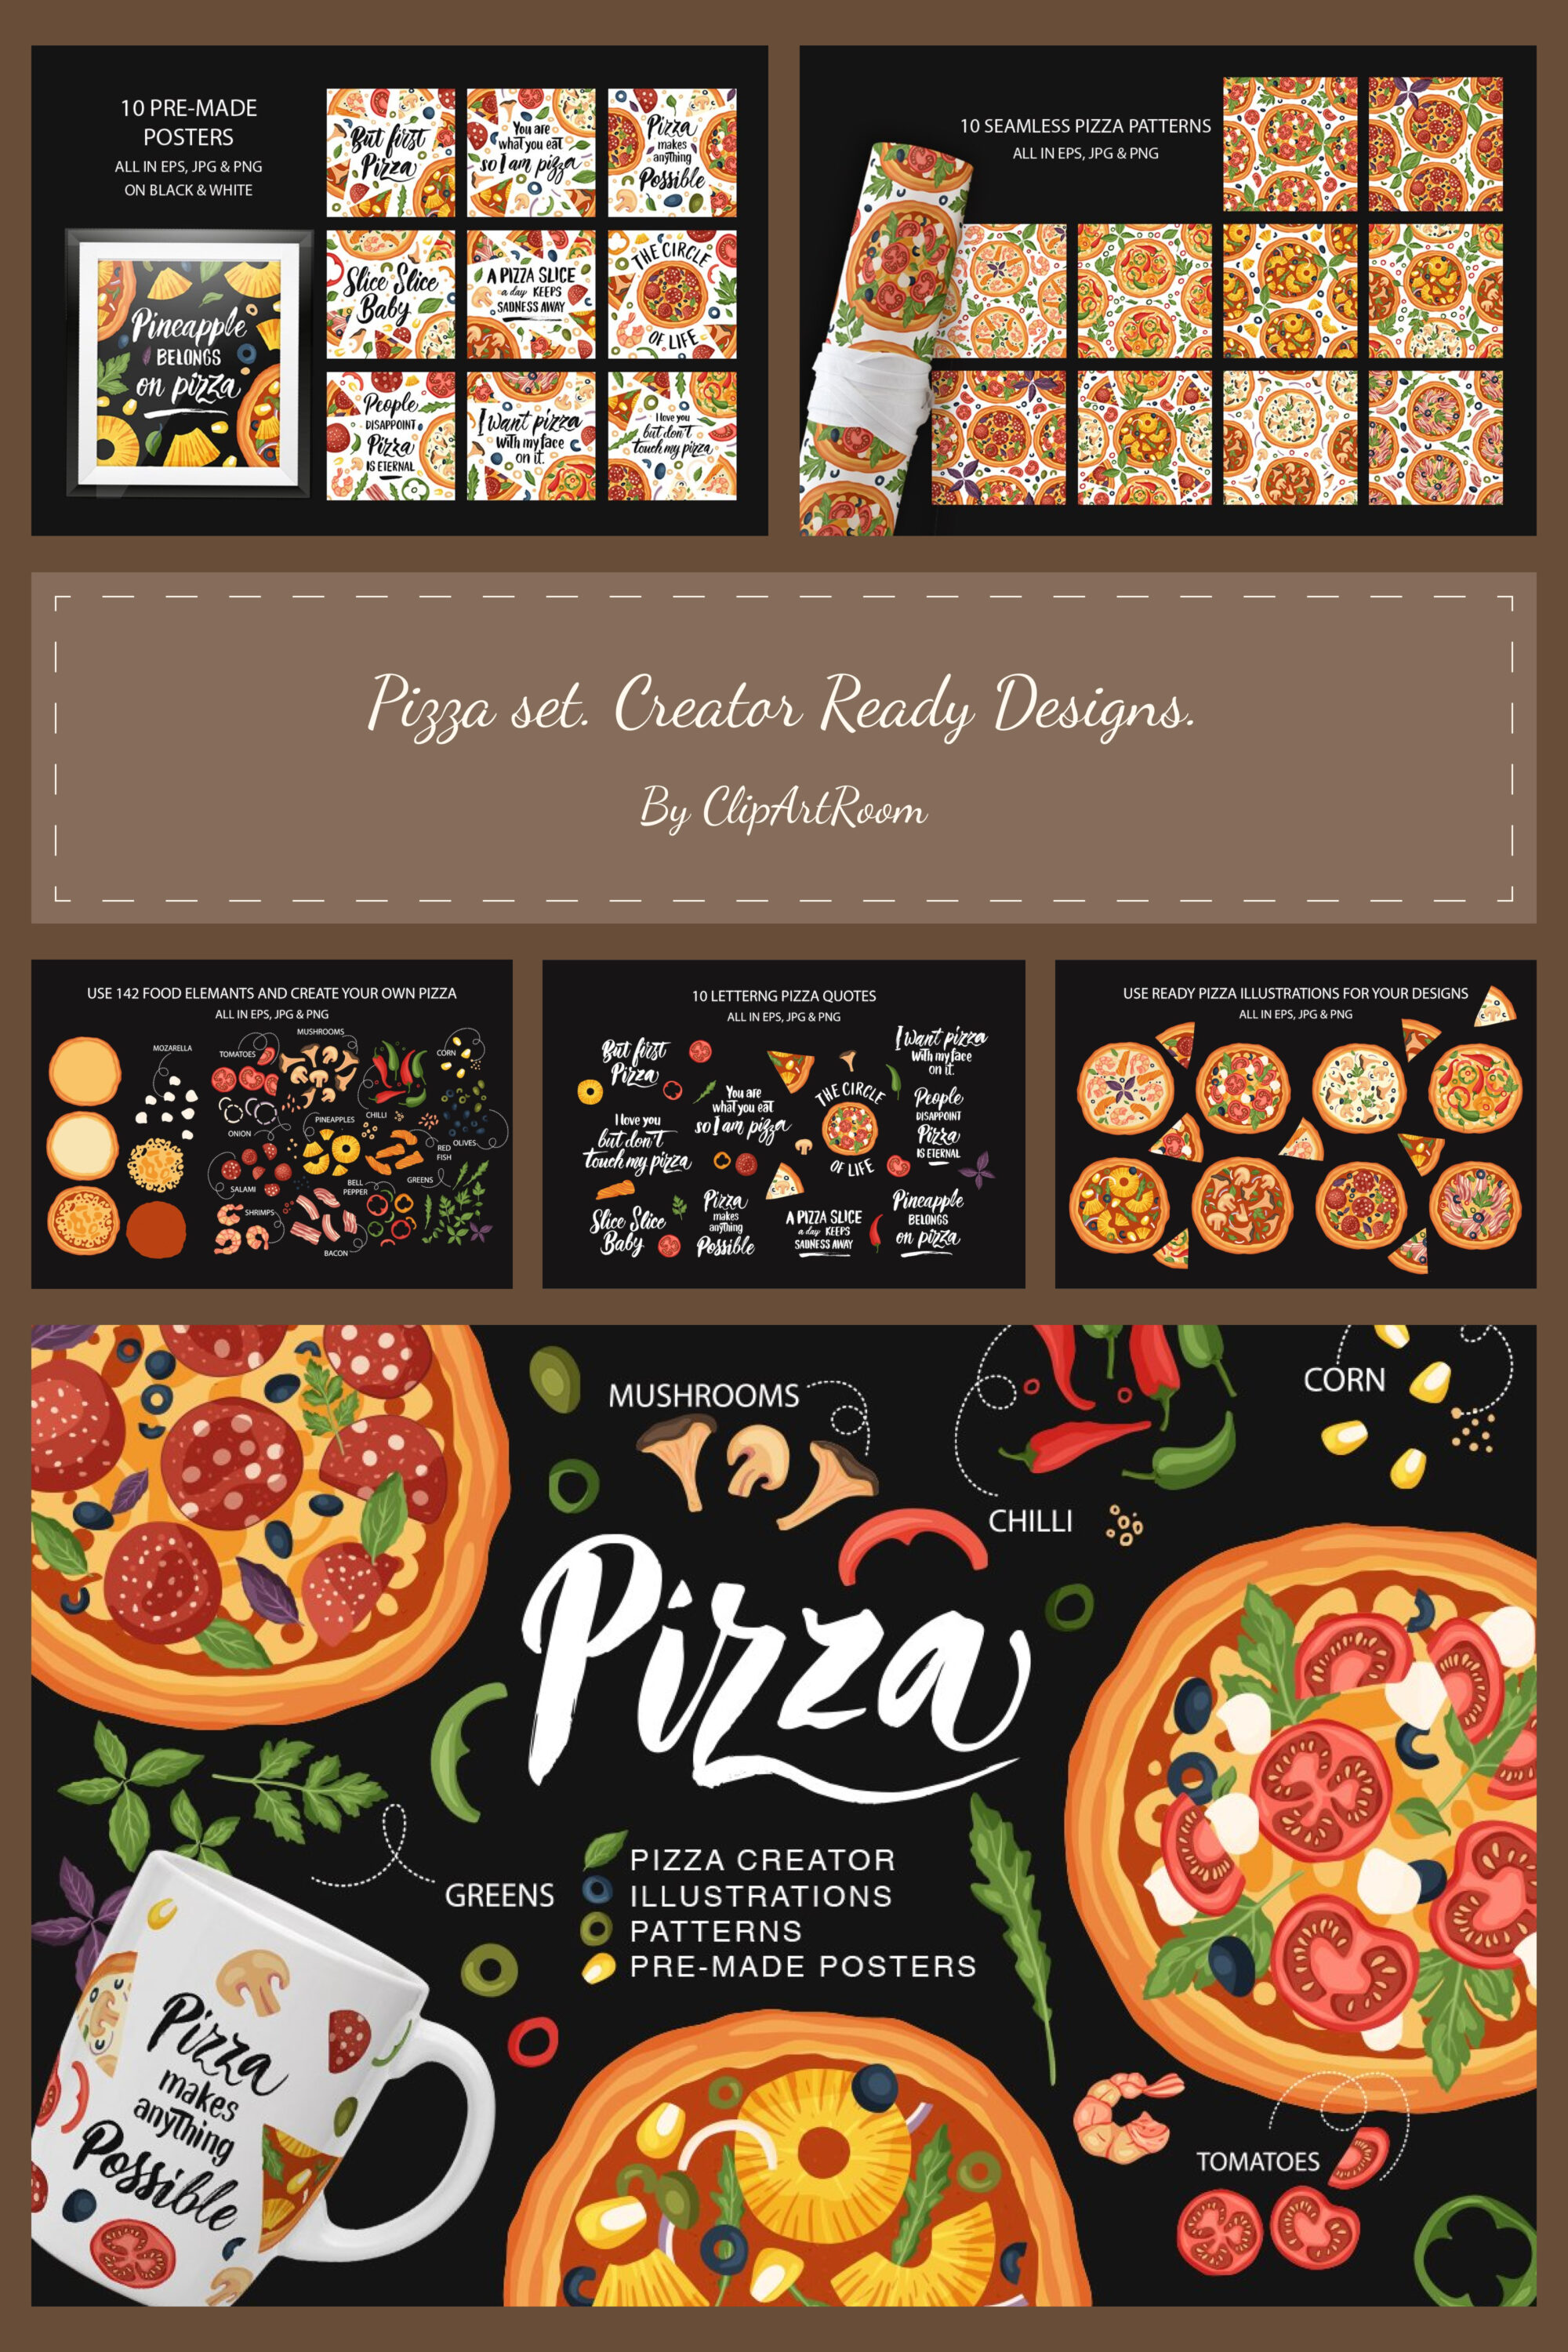 Pizza set. creator ready designs of pinterest.